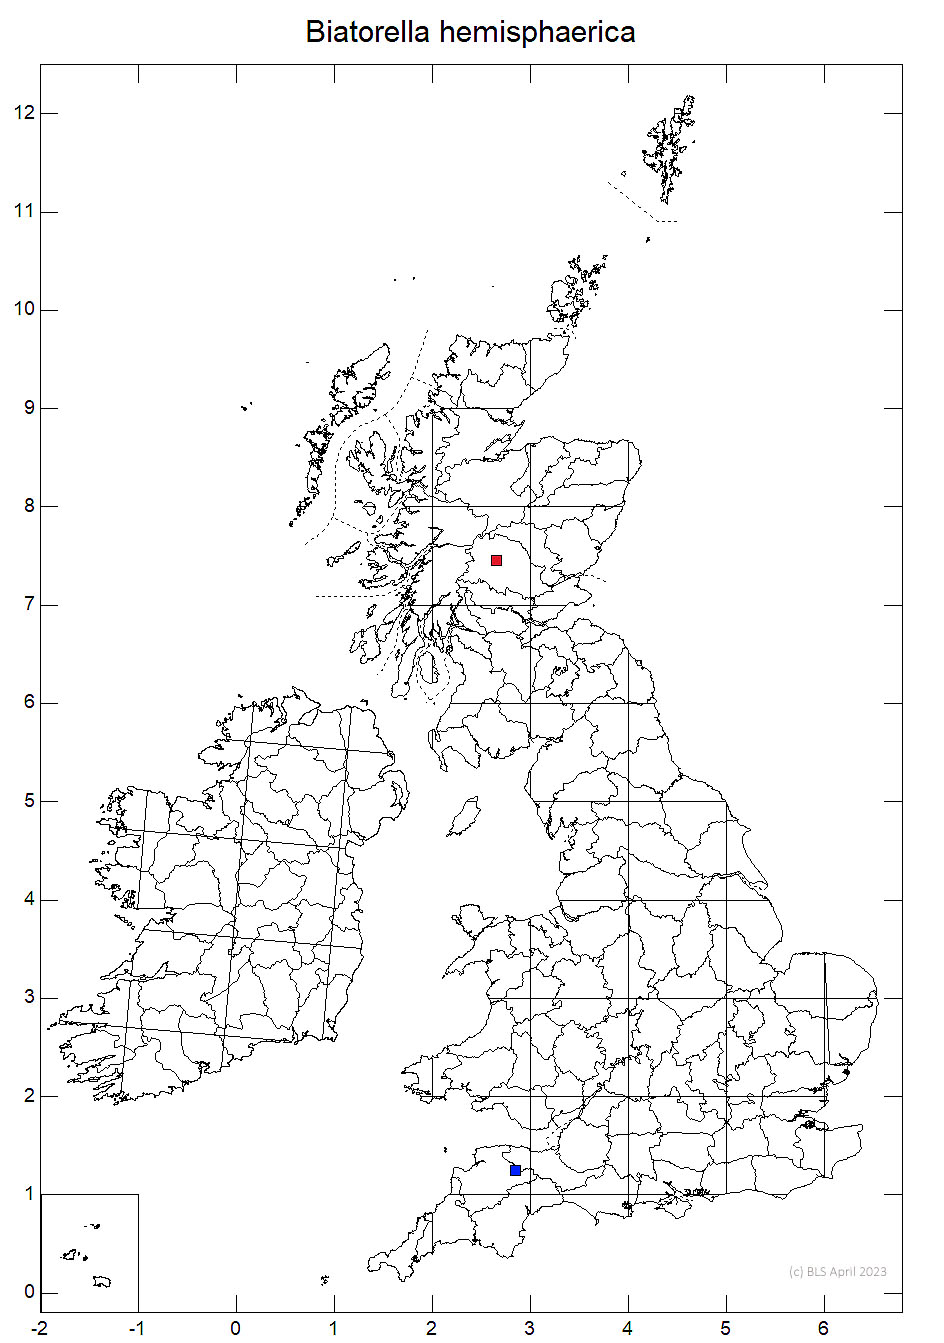 Biatorella hemisphaerica 10km sq distribution map